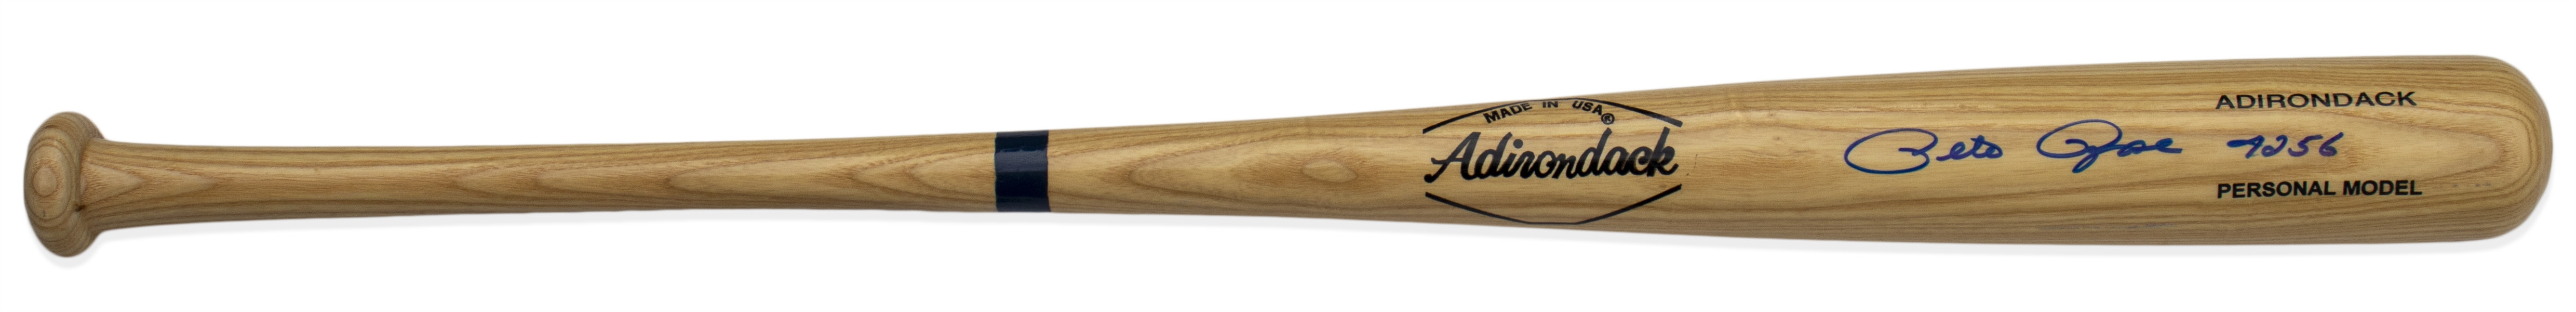 Pete Rose Signed Baseball Bat -- With JSA COA